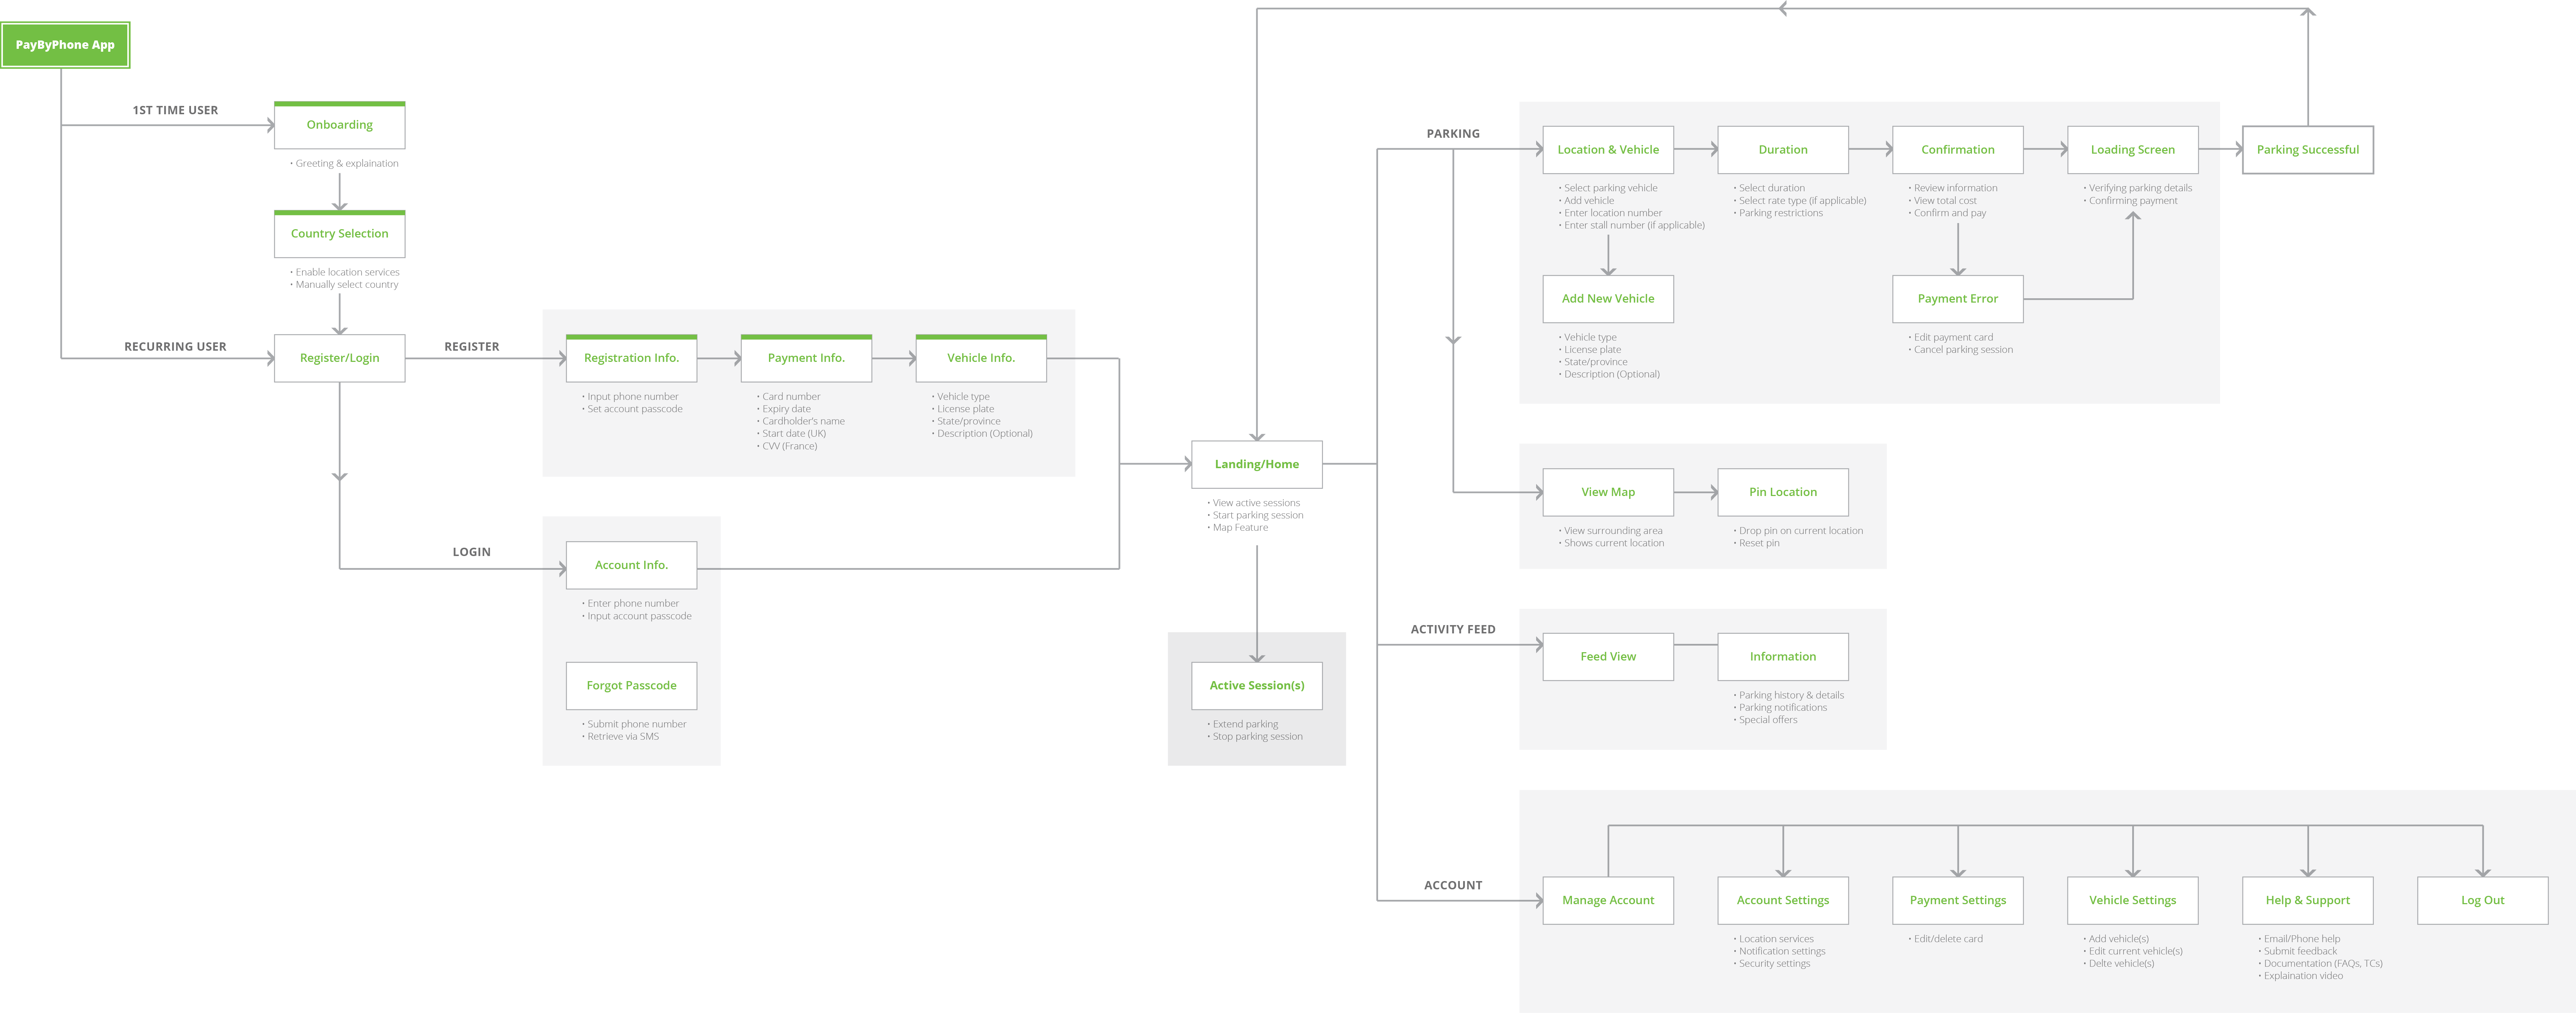 Information architecture diagram